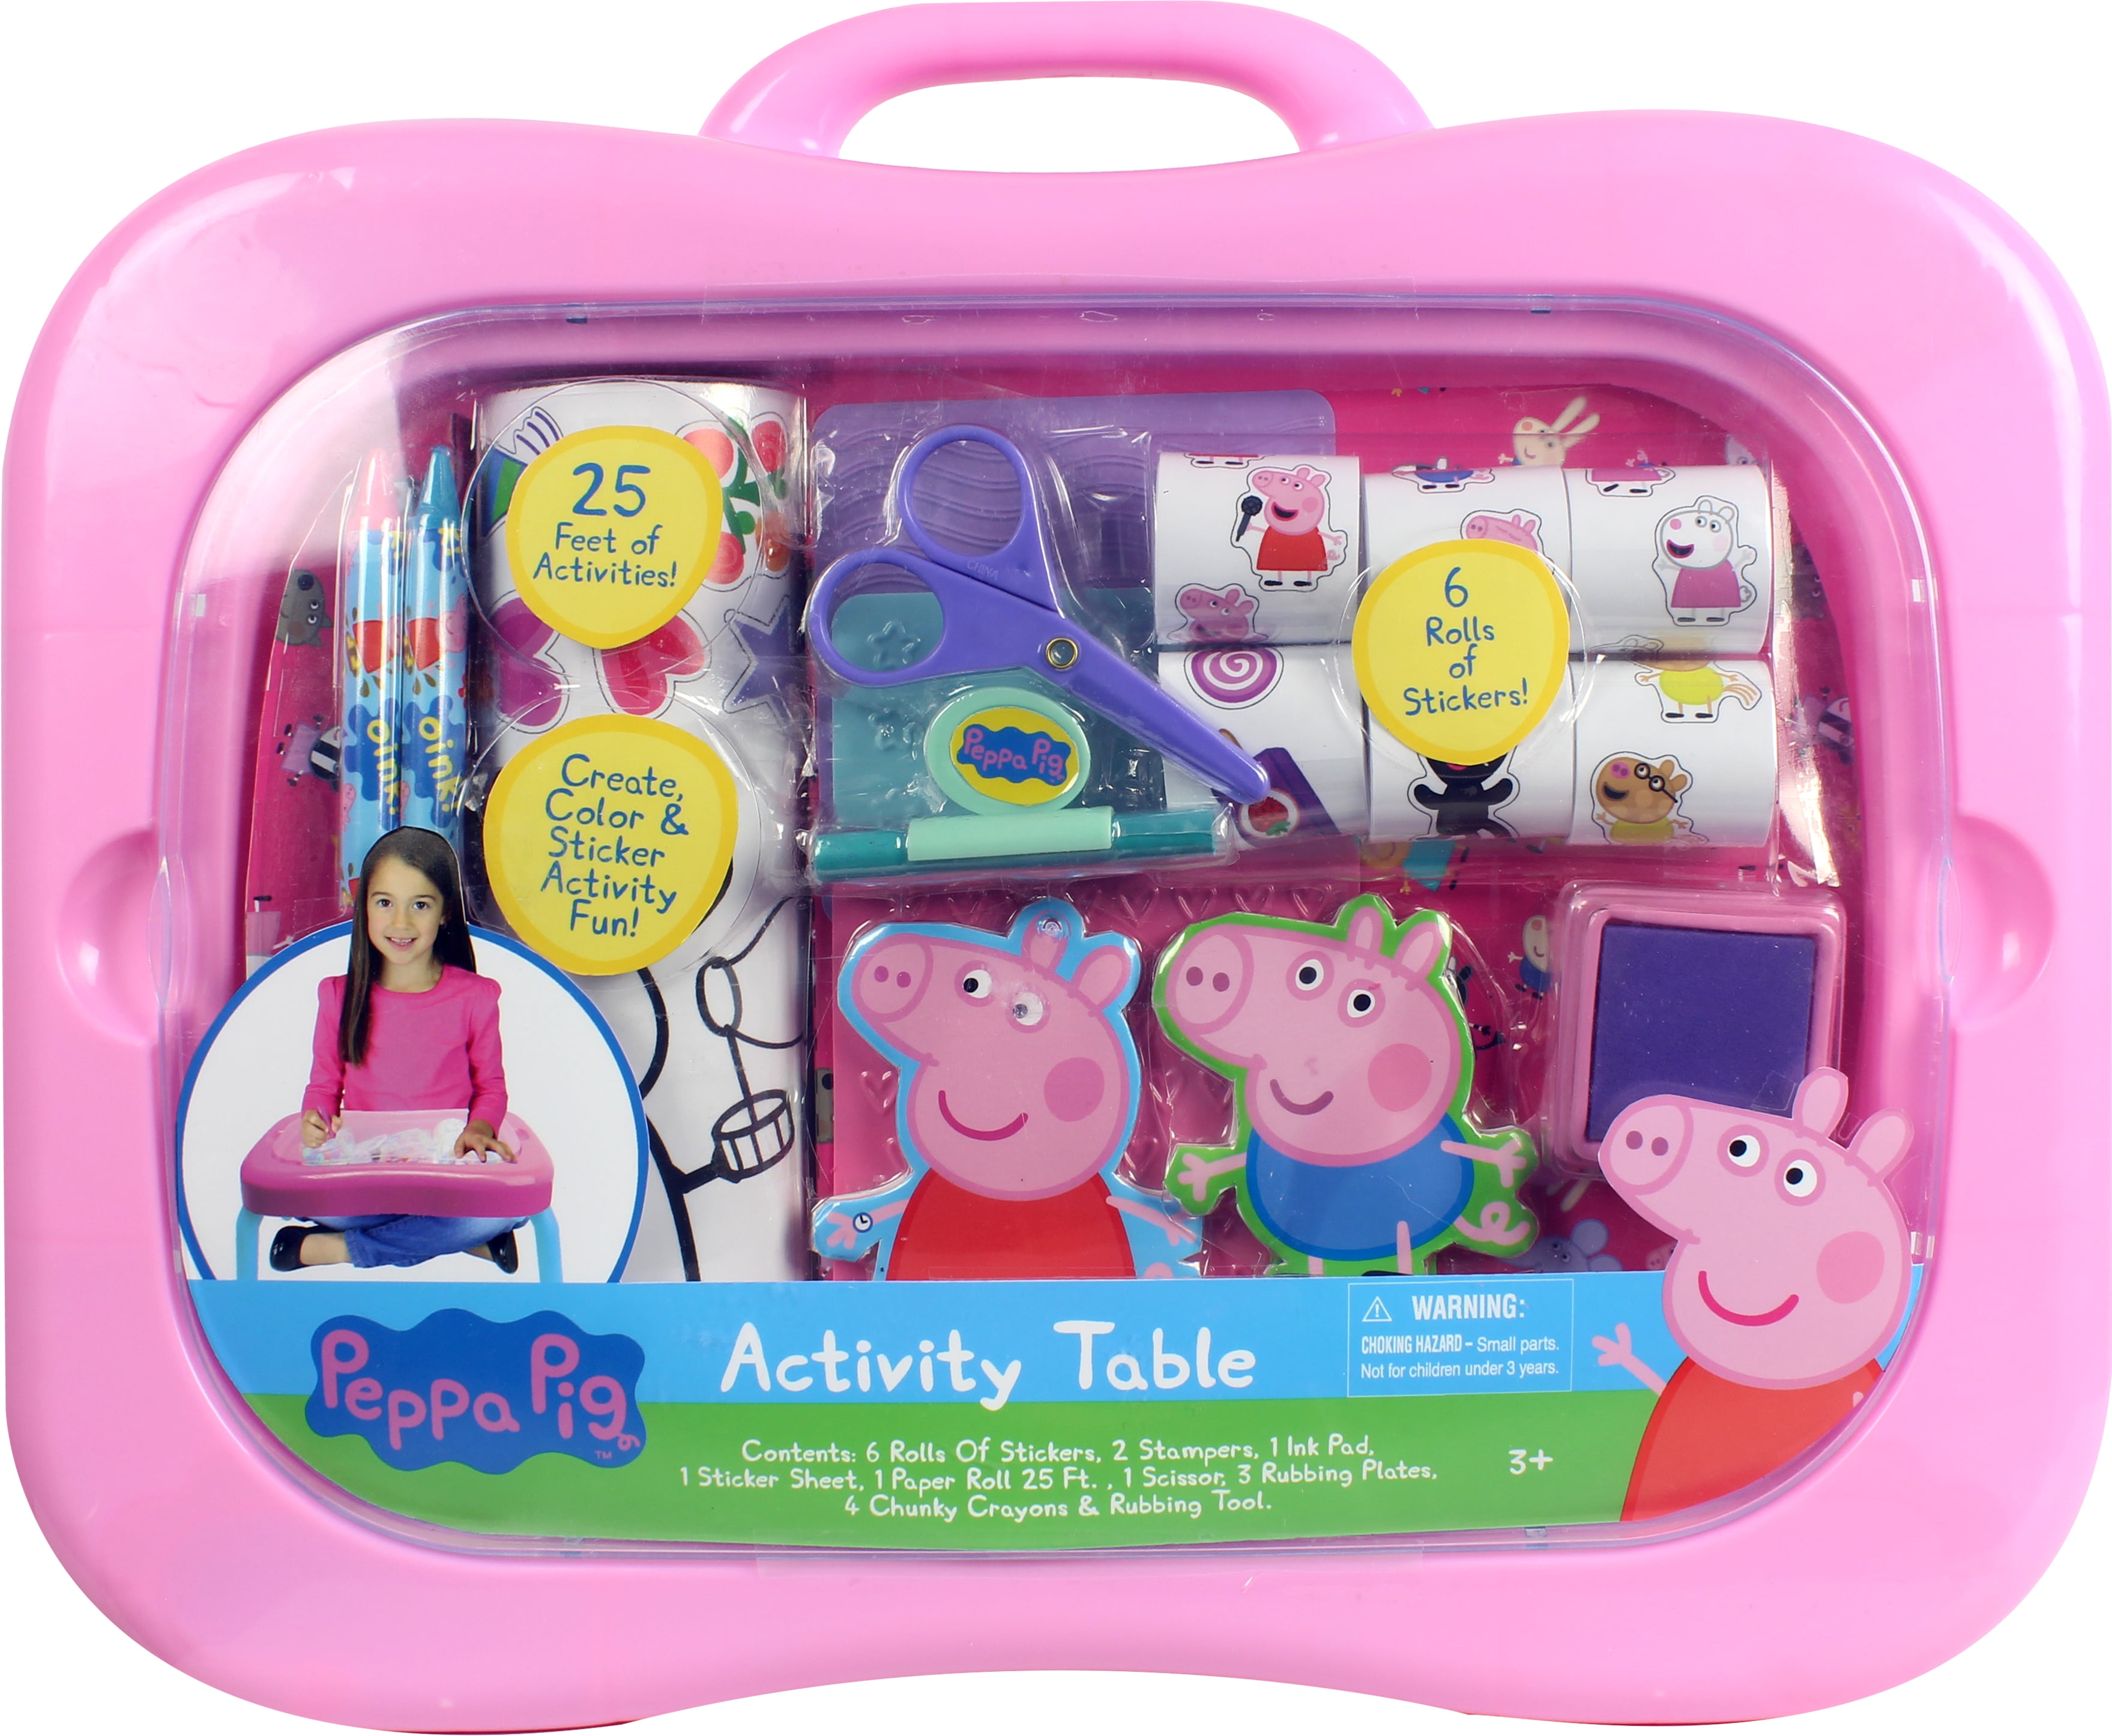 Peppa Pig - Coleção de Kids and Teens (@kidsandteens)